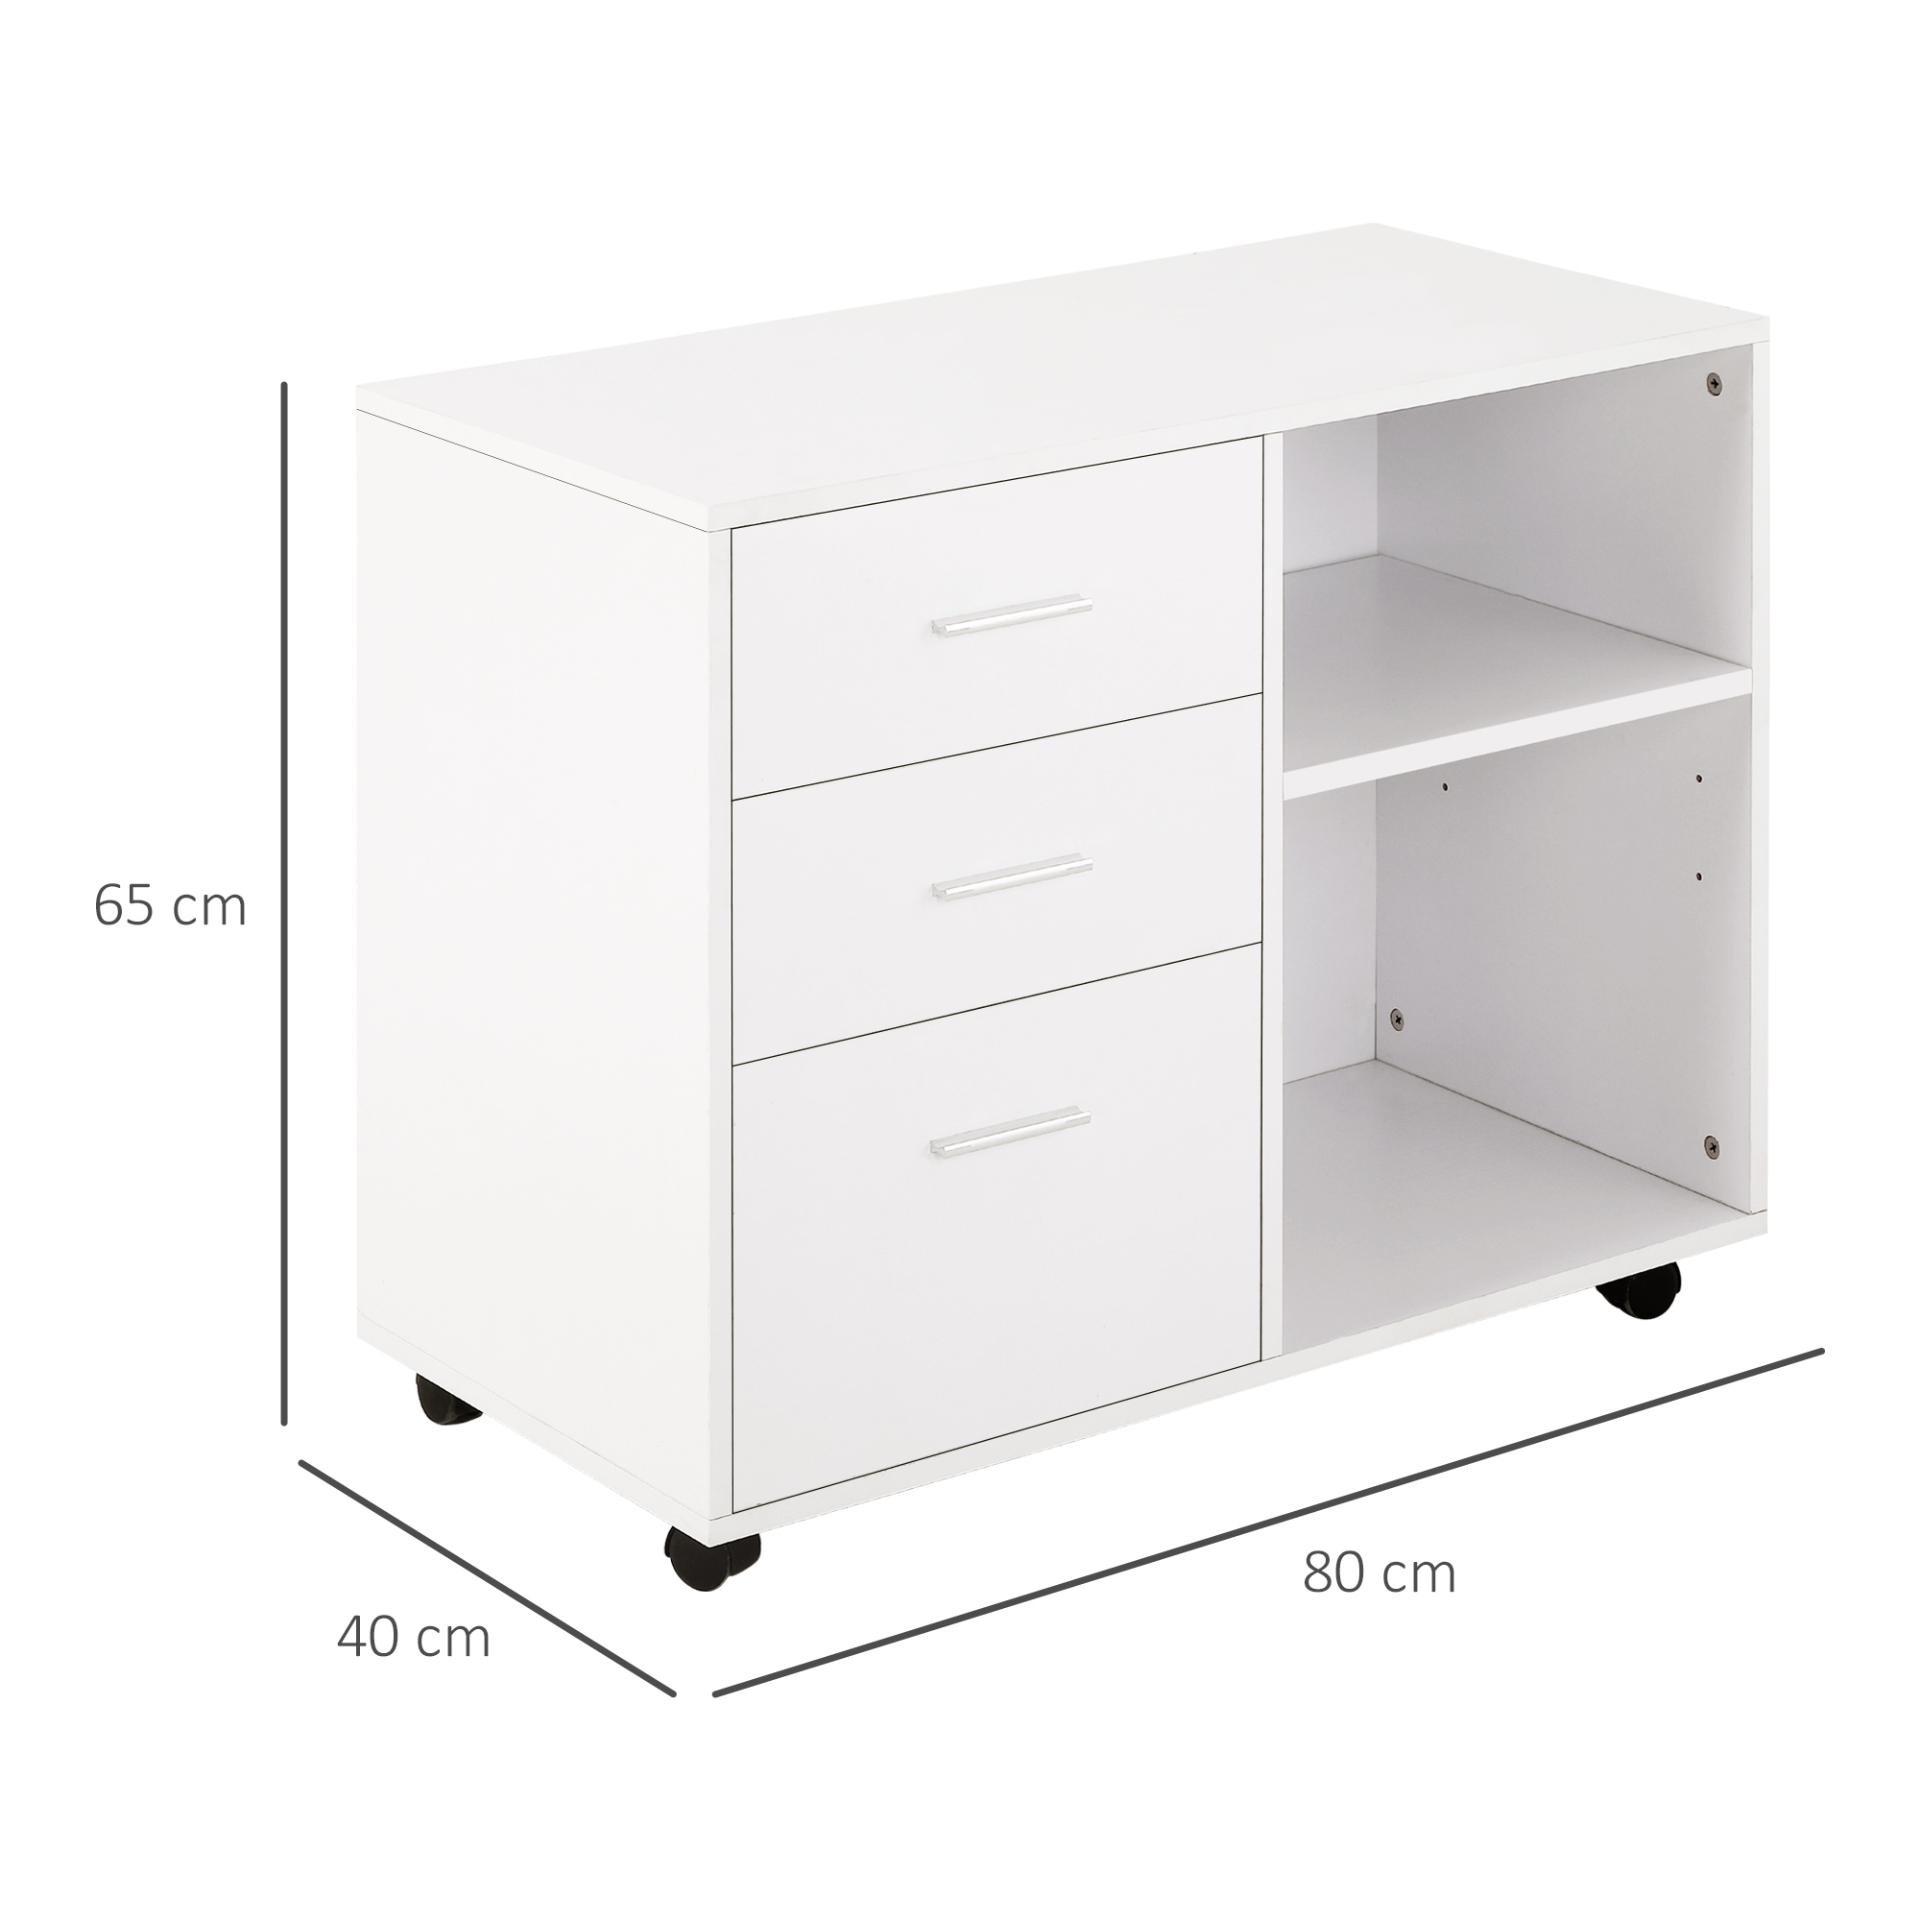 HOMCOM Freestanding Printer Stand Unit Office Desk Side Mobile Storage w/ Wheels 3 Drawers, 2 Open Shelves Modern Style 80L x 40W x 65H cm - White